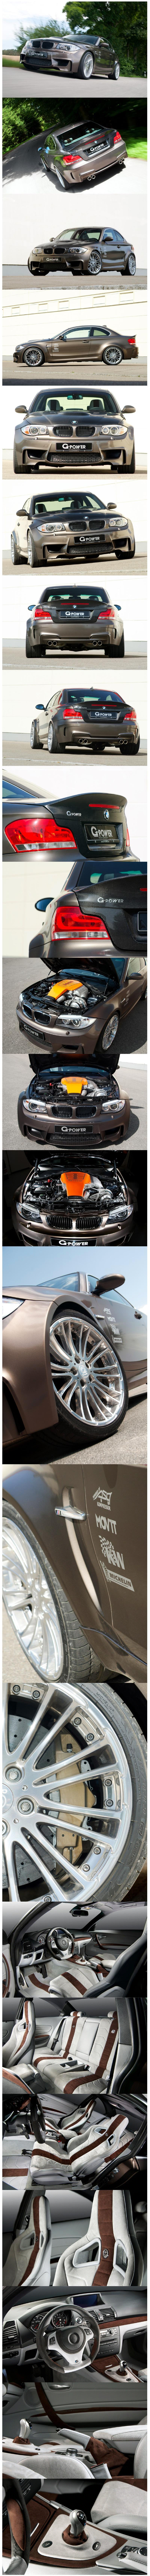 BMW G1 V8 허리케인 RS.jpg